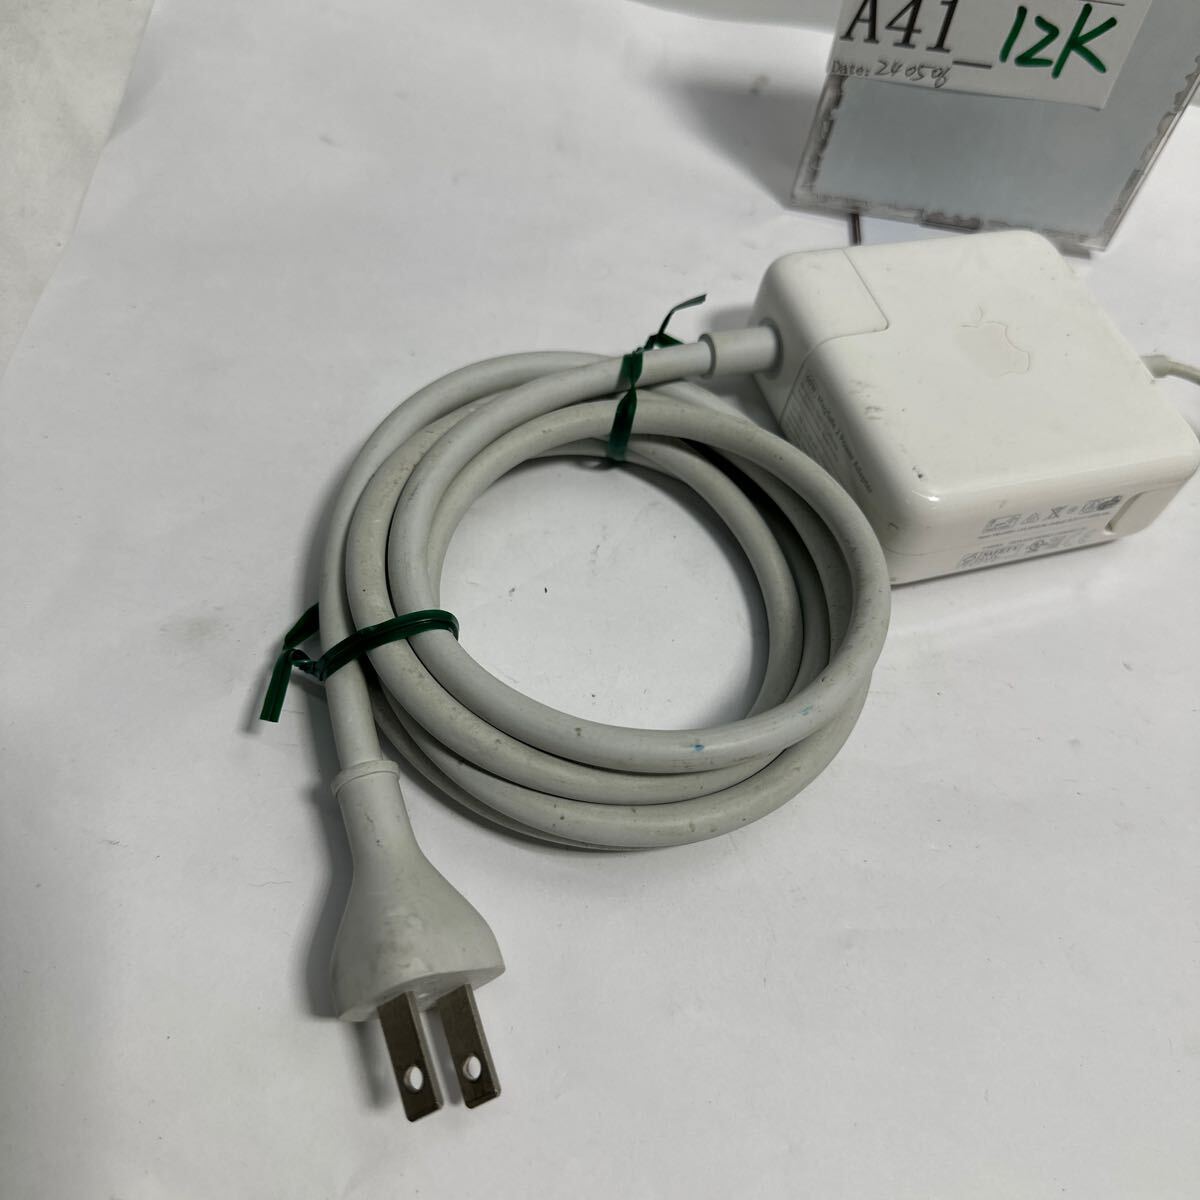 「A41_12K」Apple 純正 60W MagSafe 2 Power Adapter A1435 MacBook ACアダプター(240506)の画像2